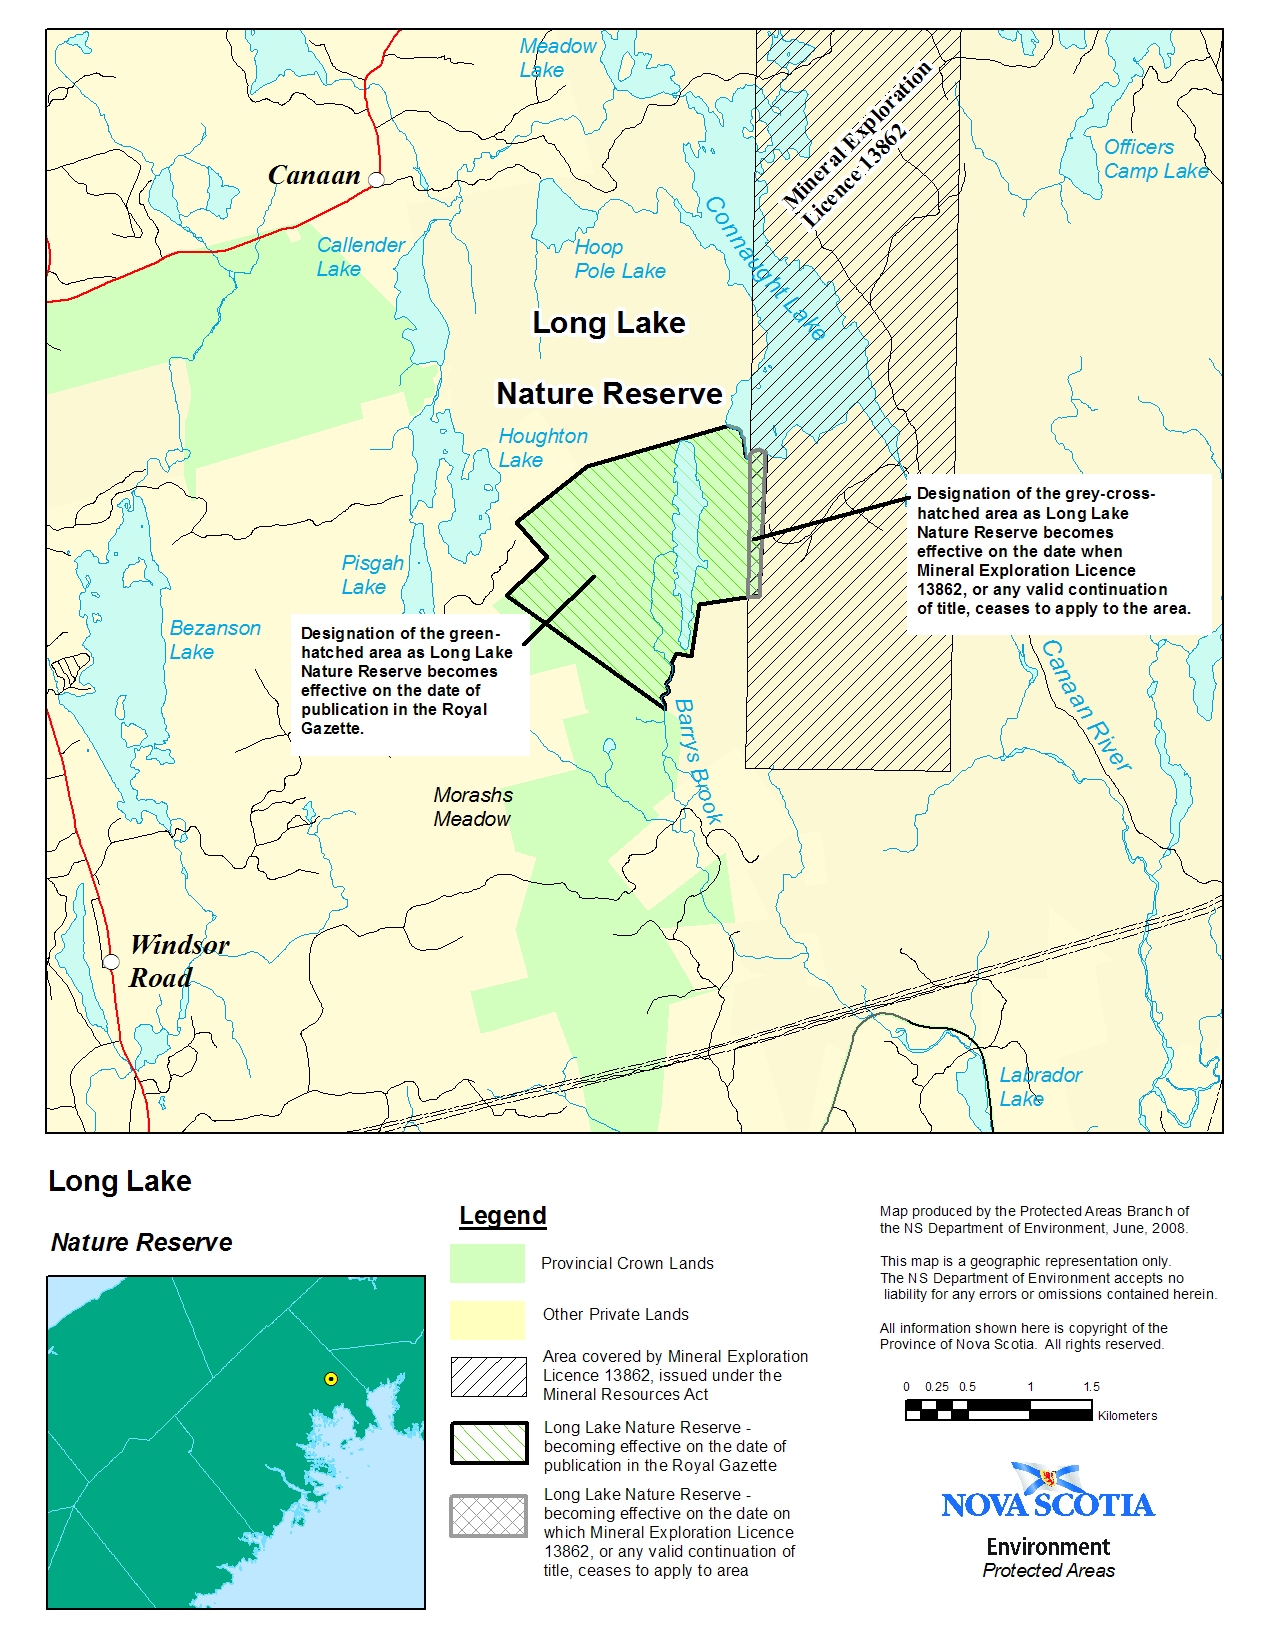 Long Lake Nature Reserve